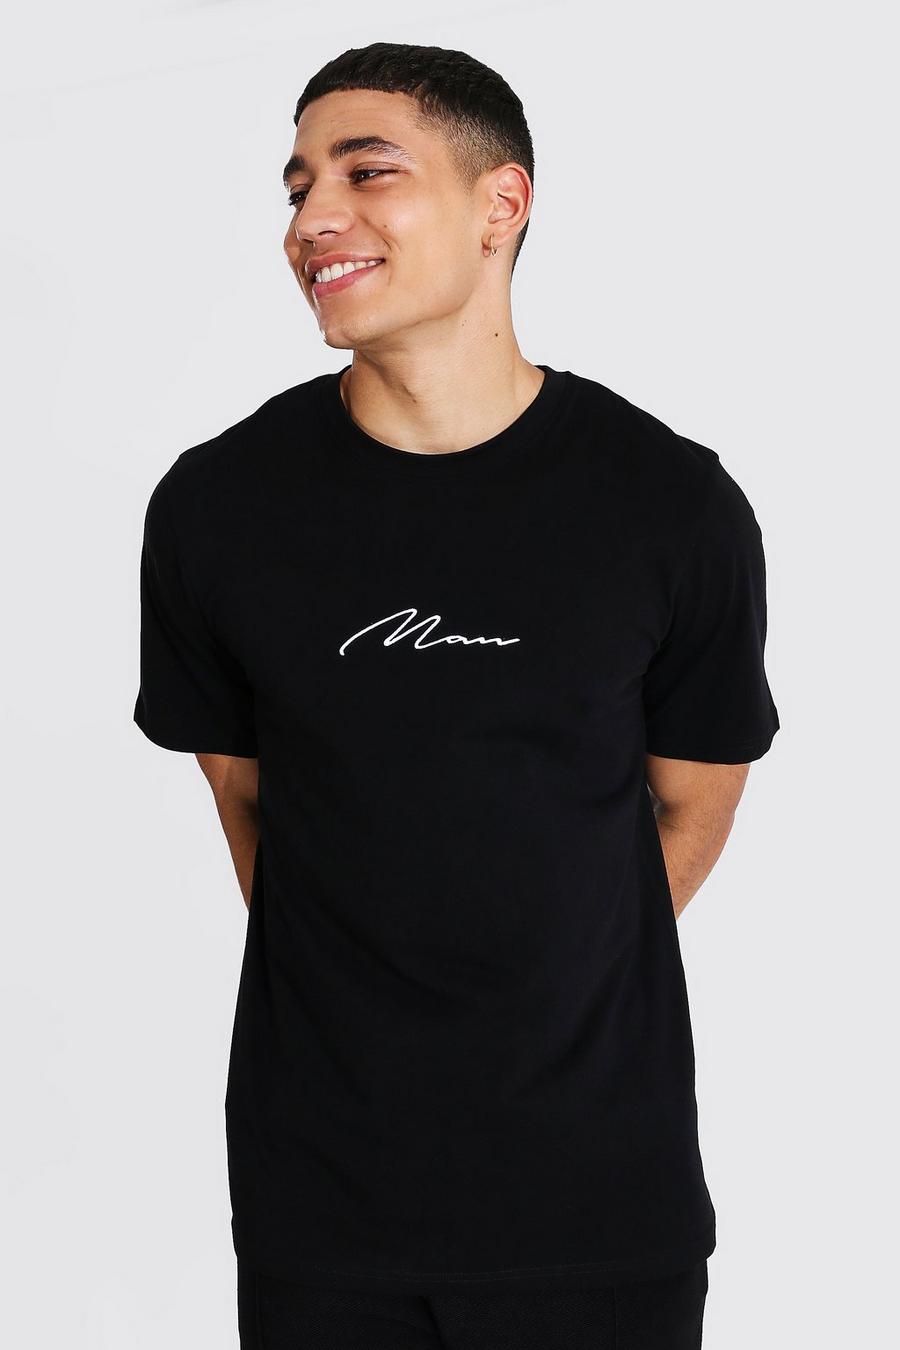 T-shirt - MAN, Black image number 1